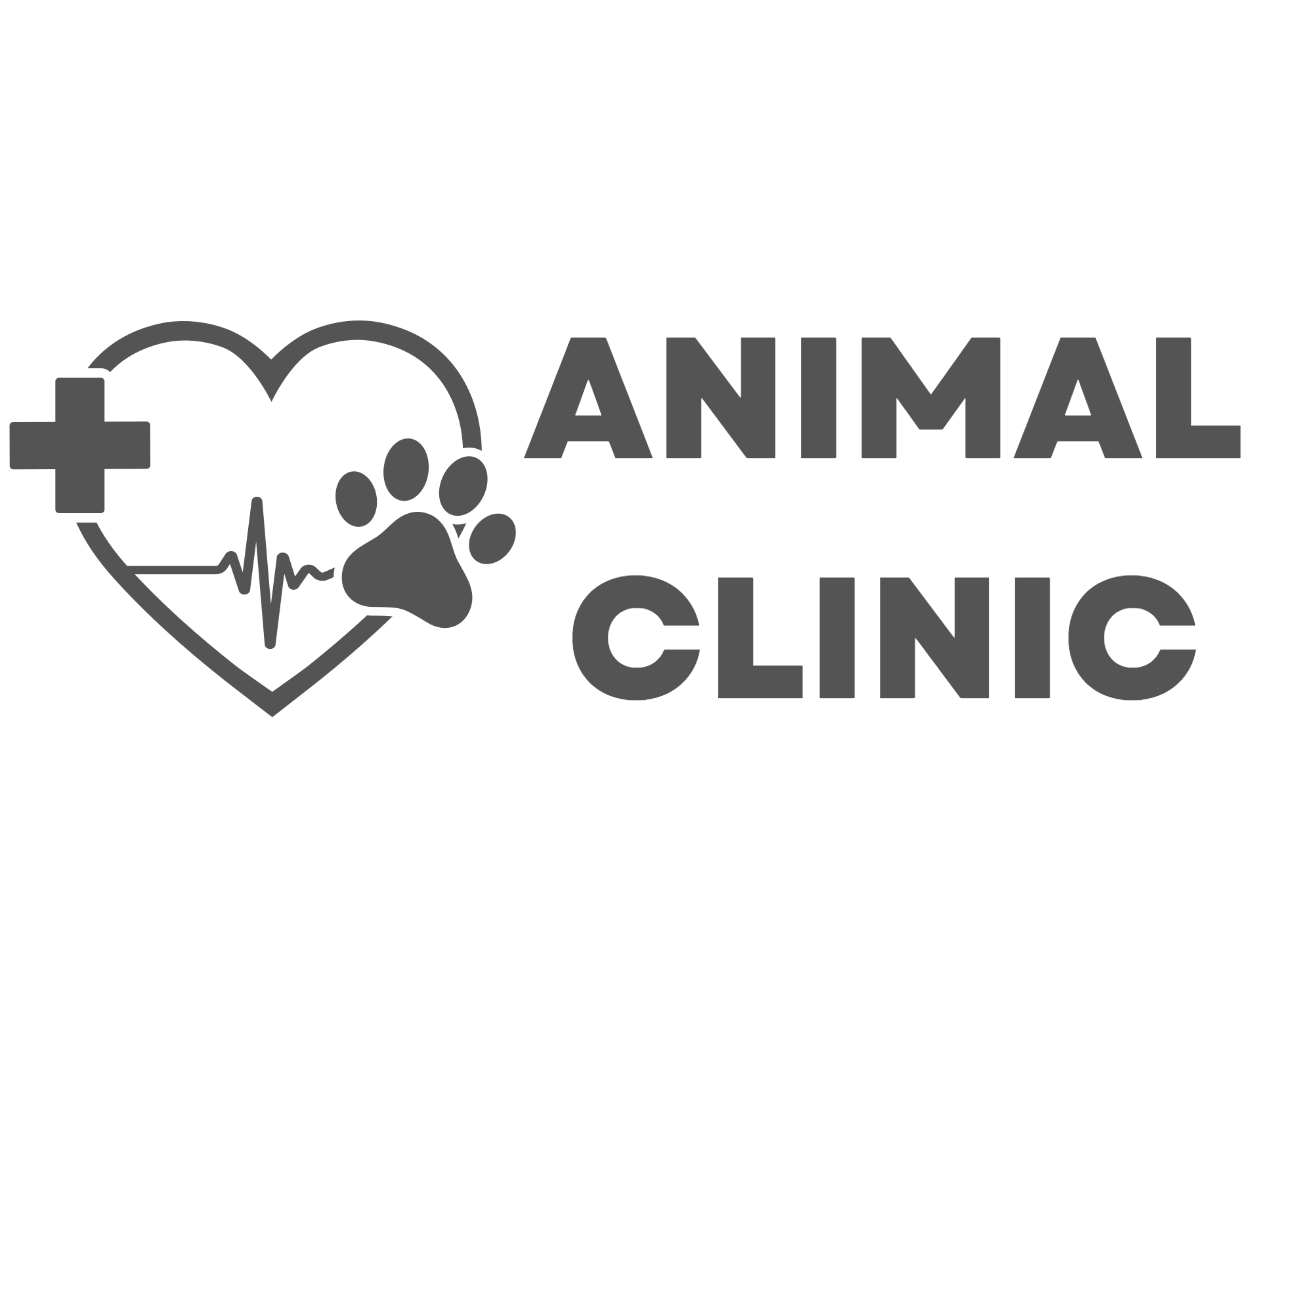 Animal Clinic